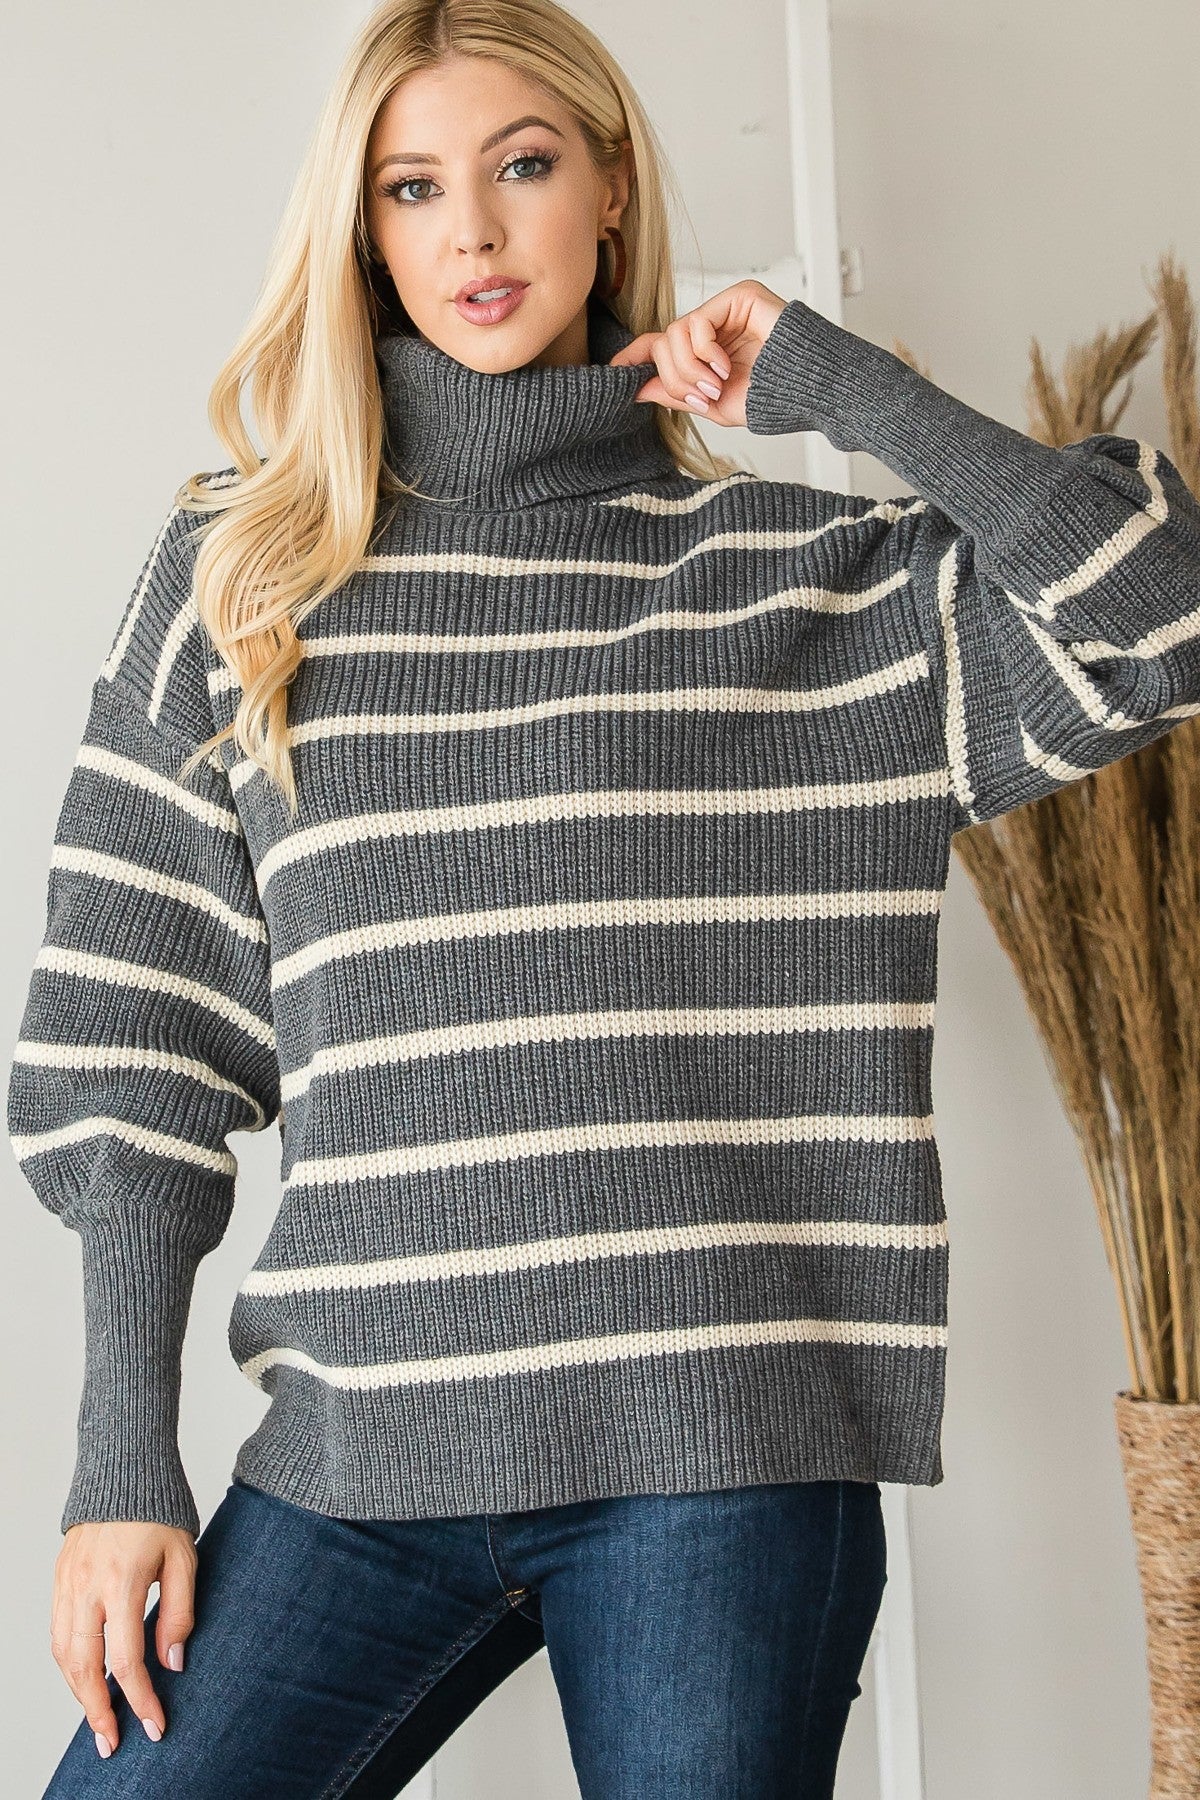 Heavy Knit Striped Turtle Neck Knit Sweater Sunny EvE Fashion